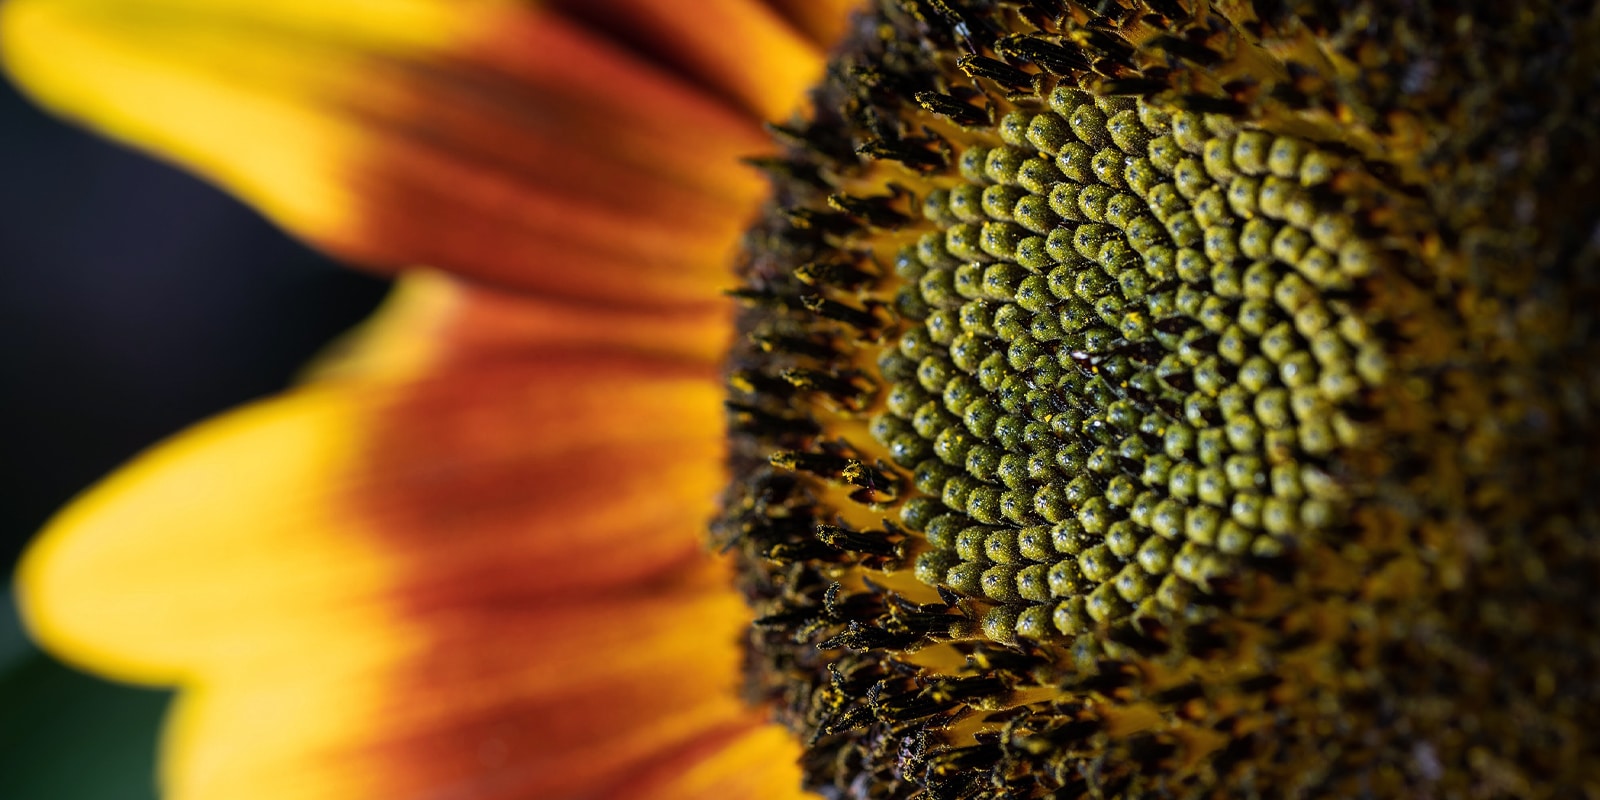 An image of a sunflower